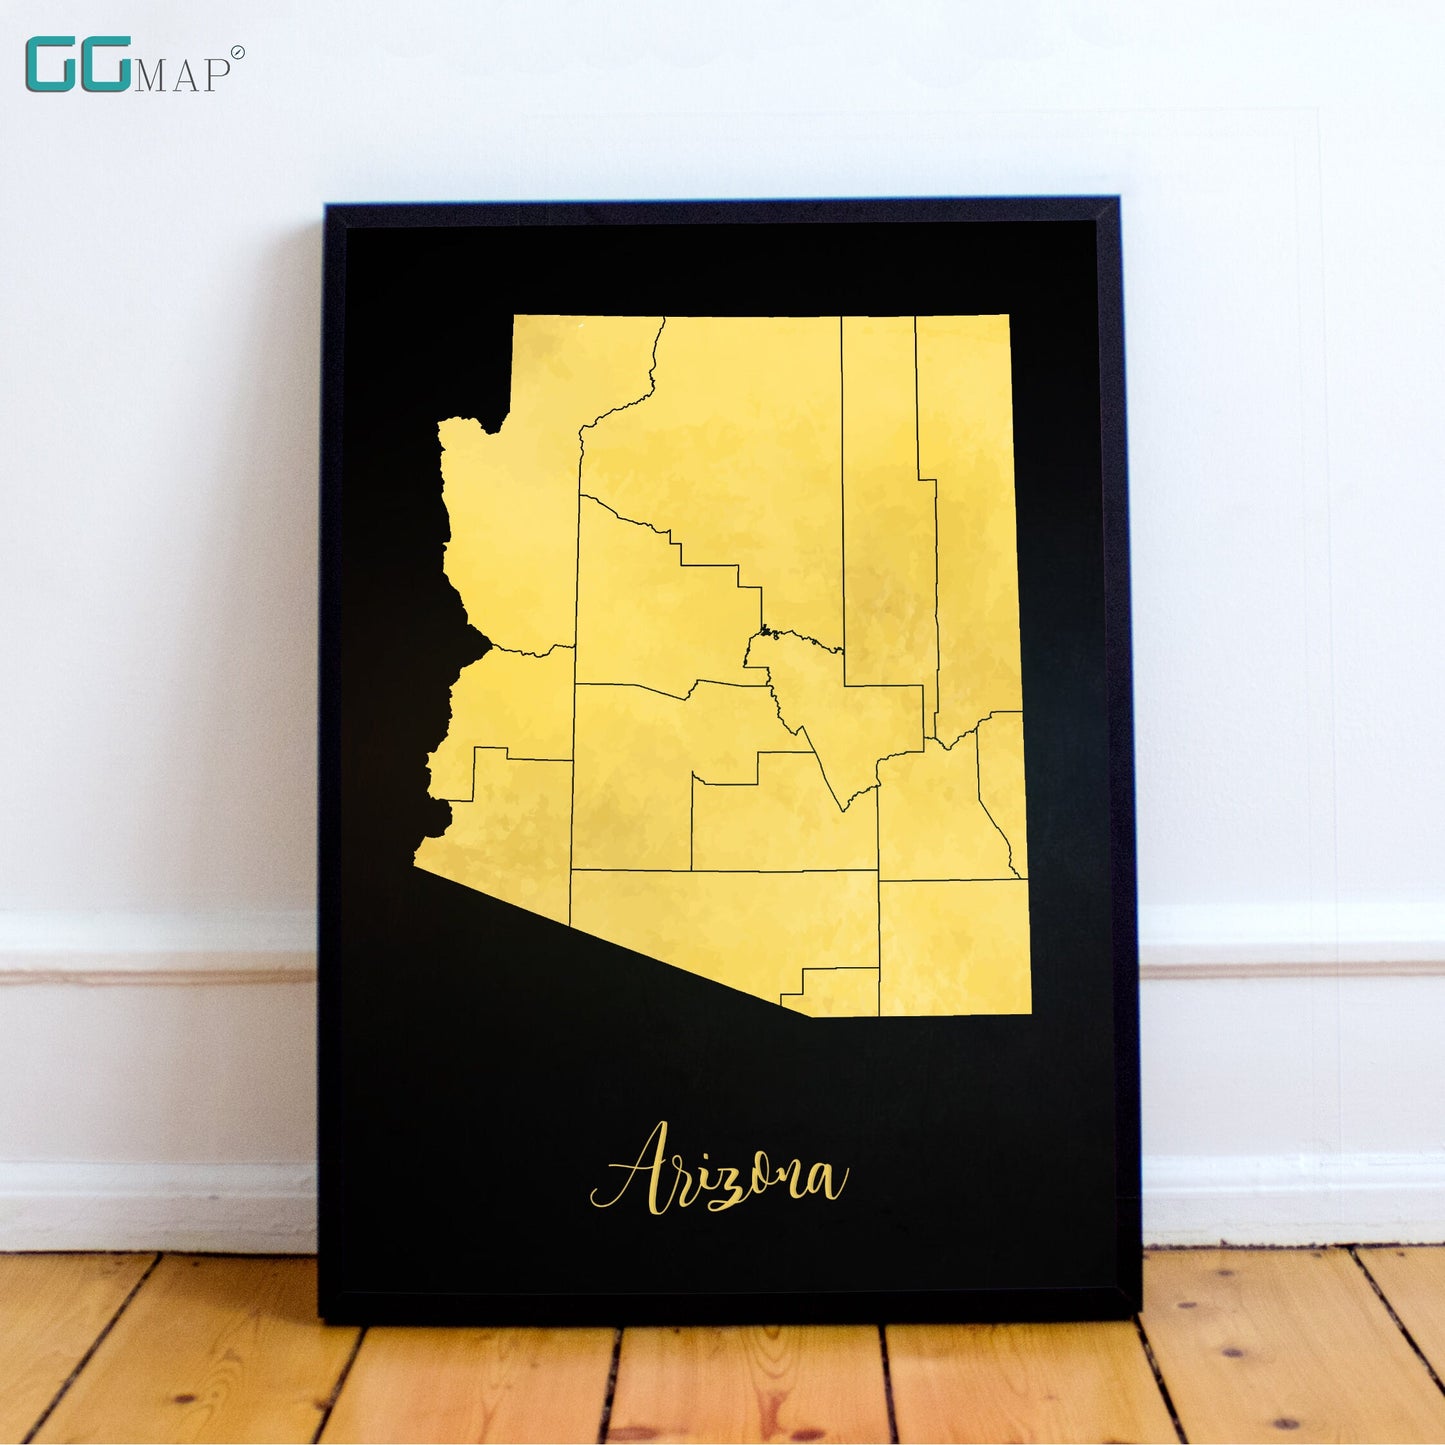 ARIZONA  map - Arizona gold map - Travel poster - Home Decor - Wall decor - Office map - Arizona gift - GGmap - Arizona poster